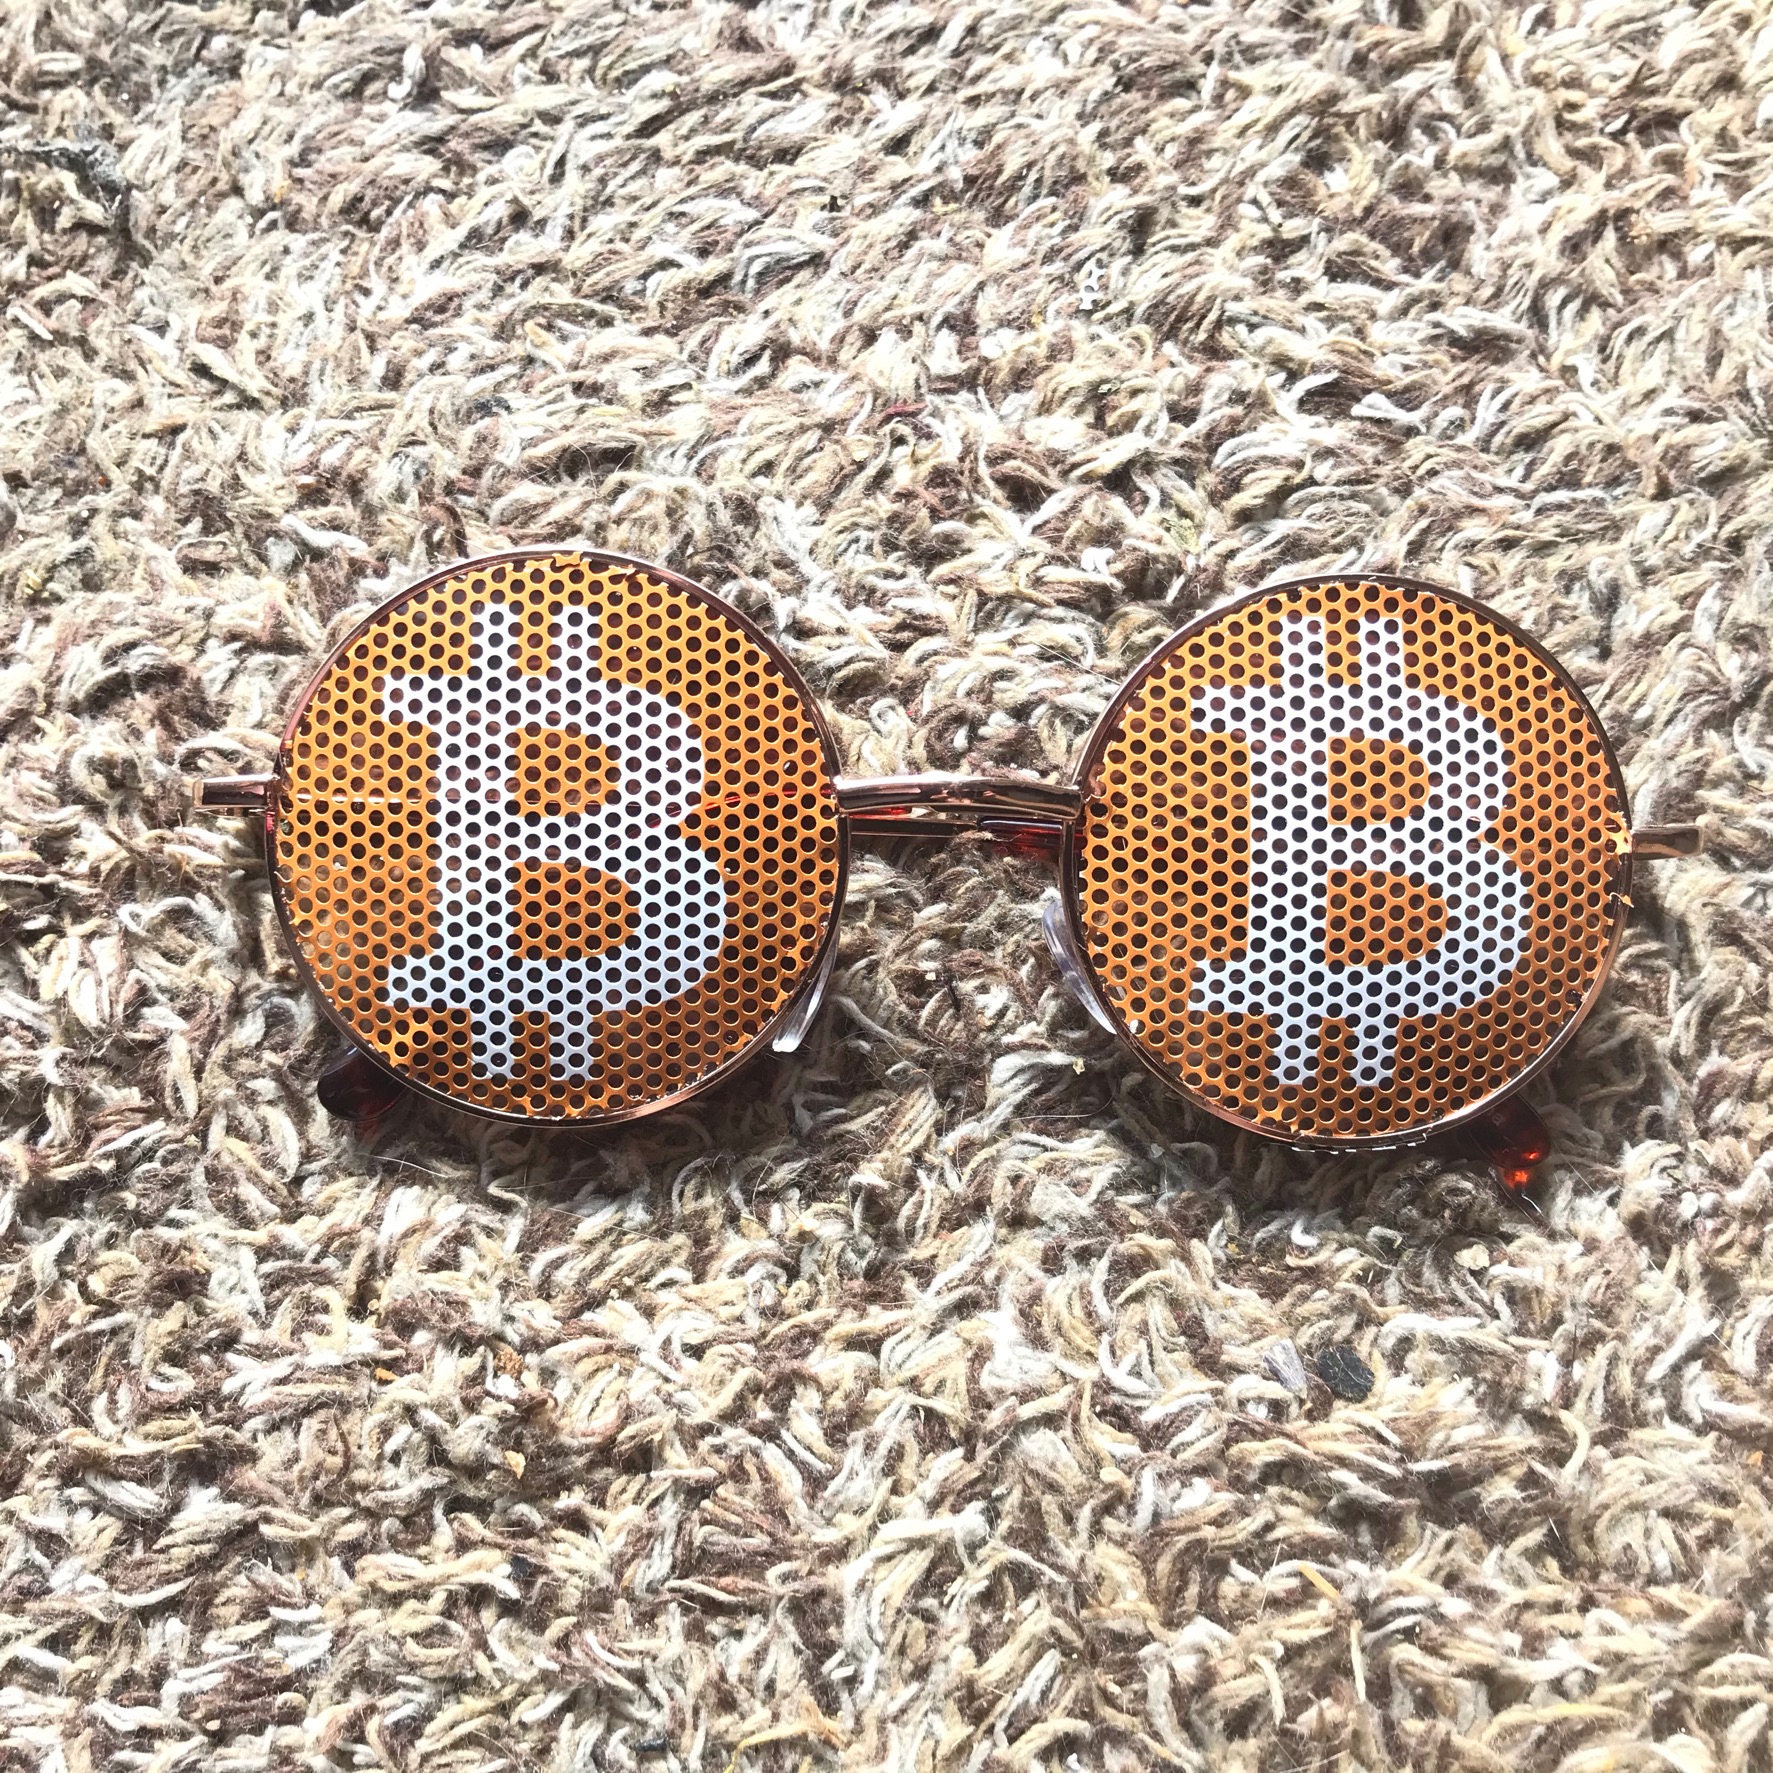 White Bitcoin Logo on Orenge Graphic Hippy Style Round Sunglasses